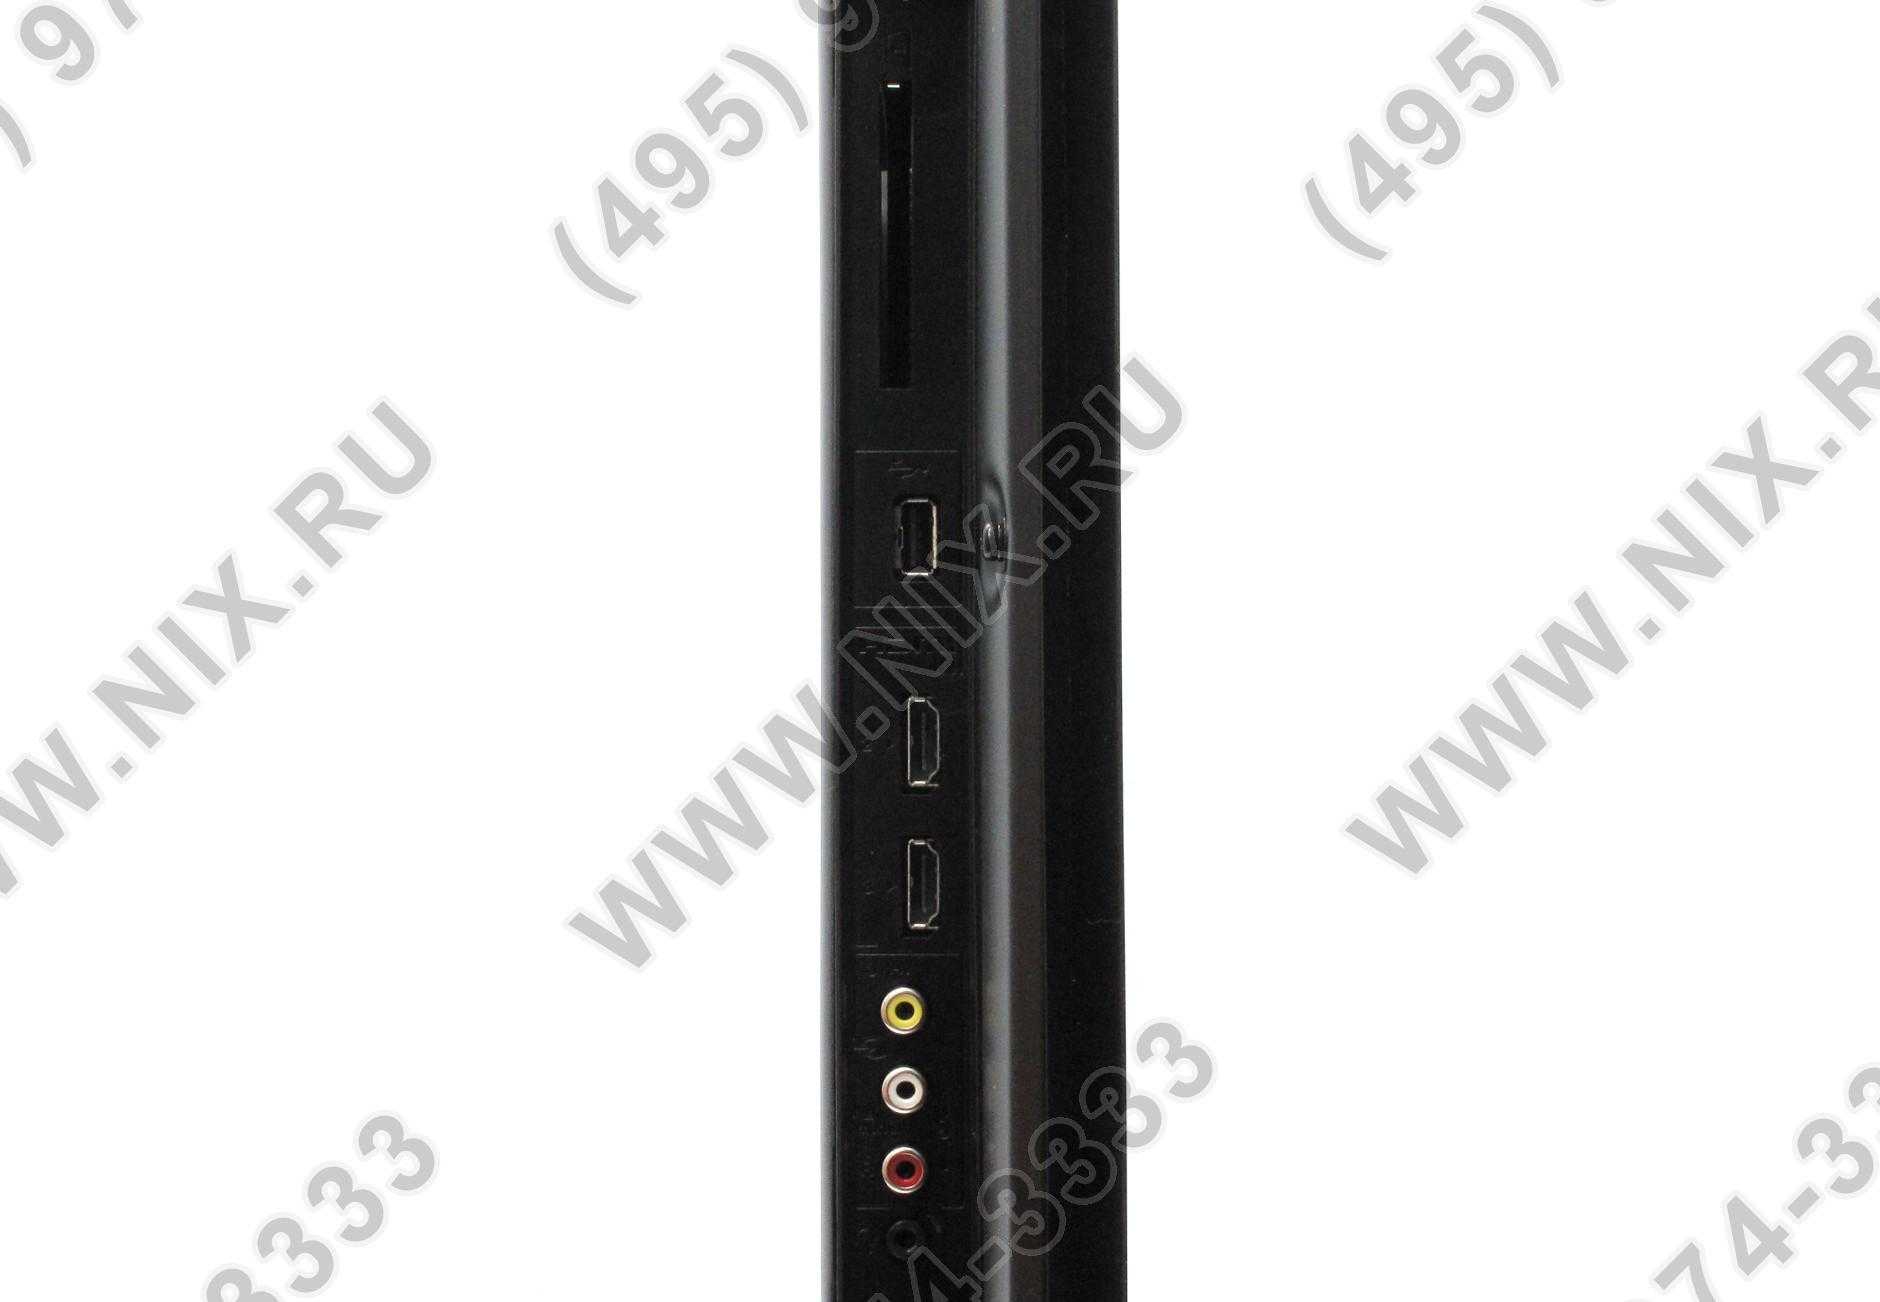 Sony kdl-32ex700 - зеленоград